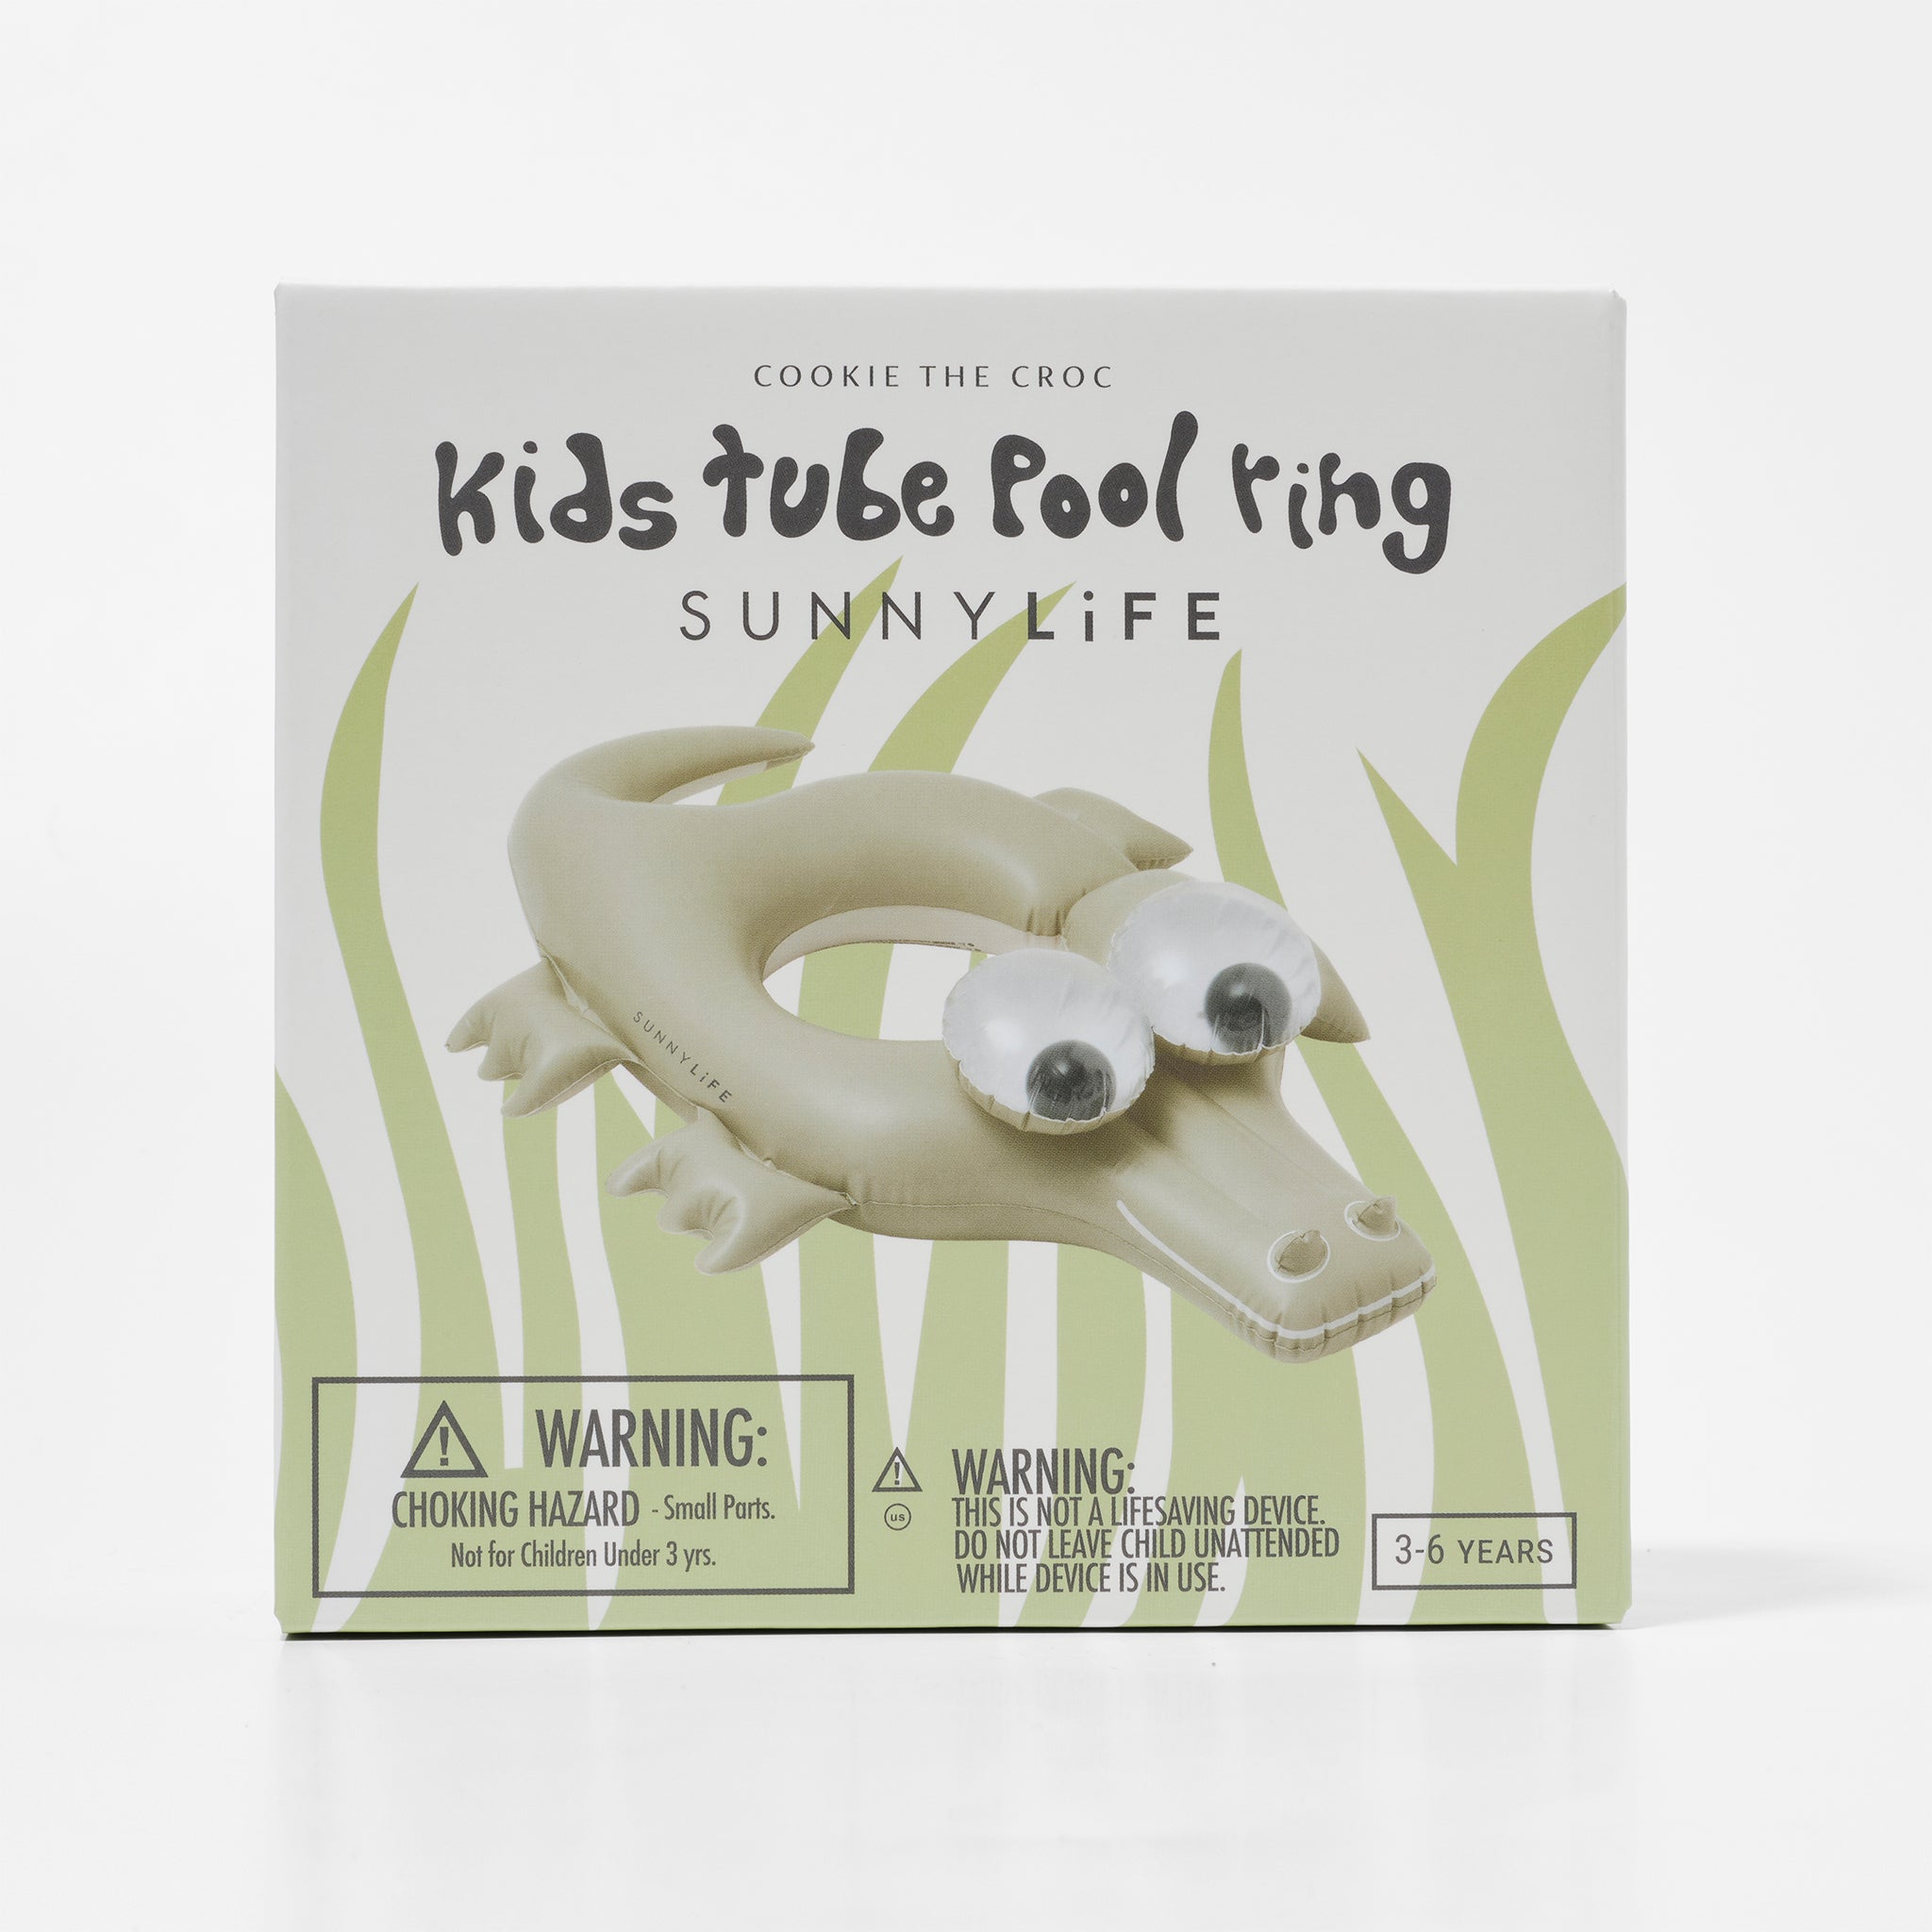 Kids Tube Pool Ring | Cookie the Croc Khaki